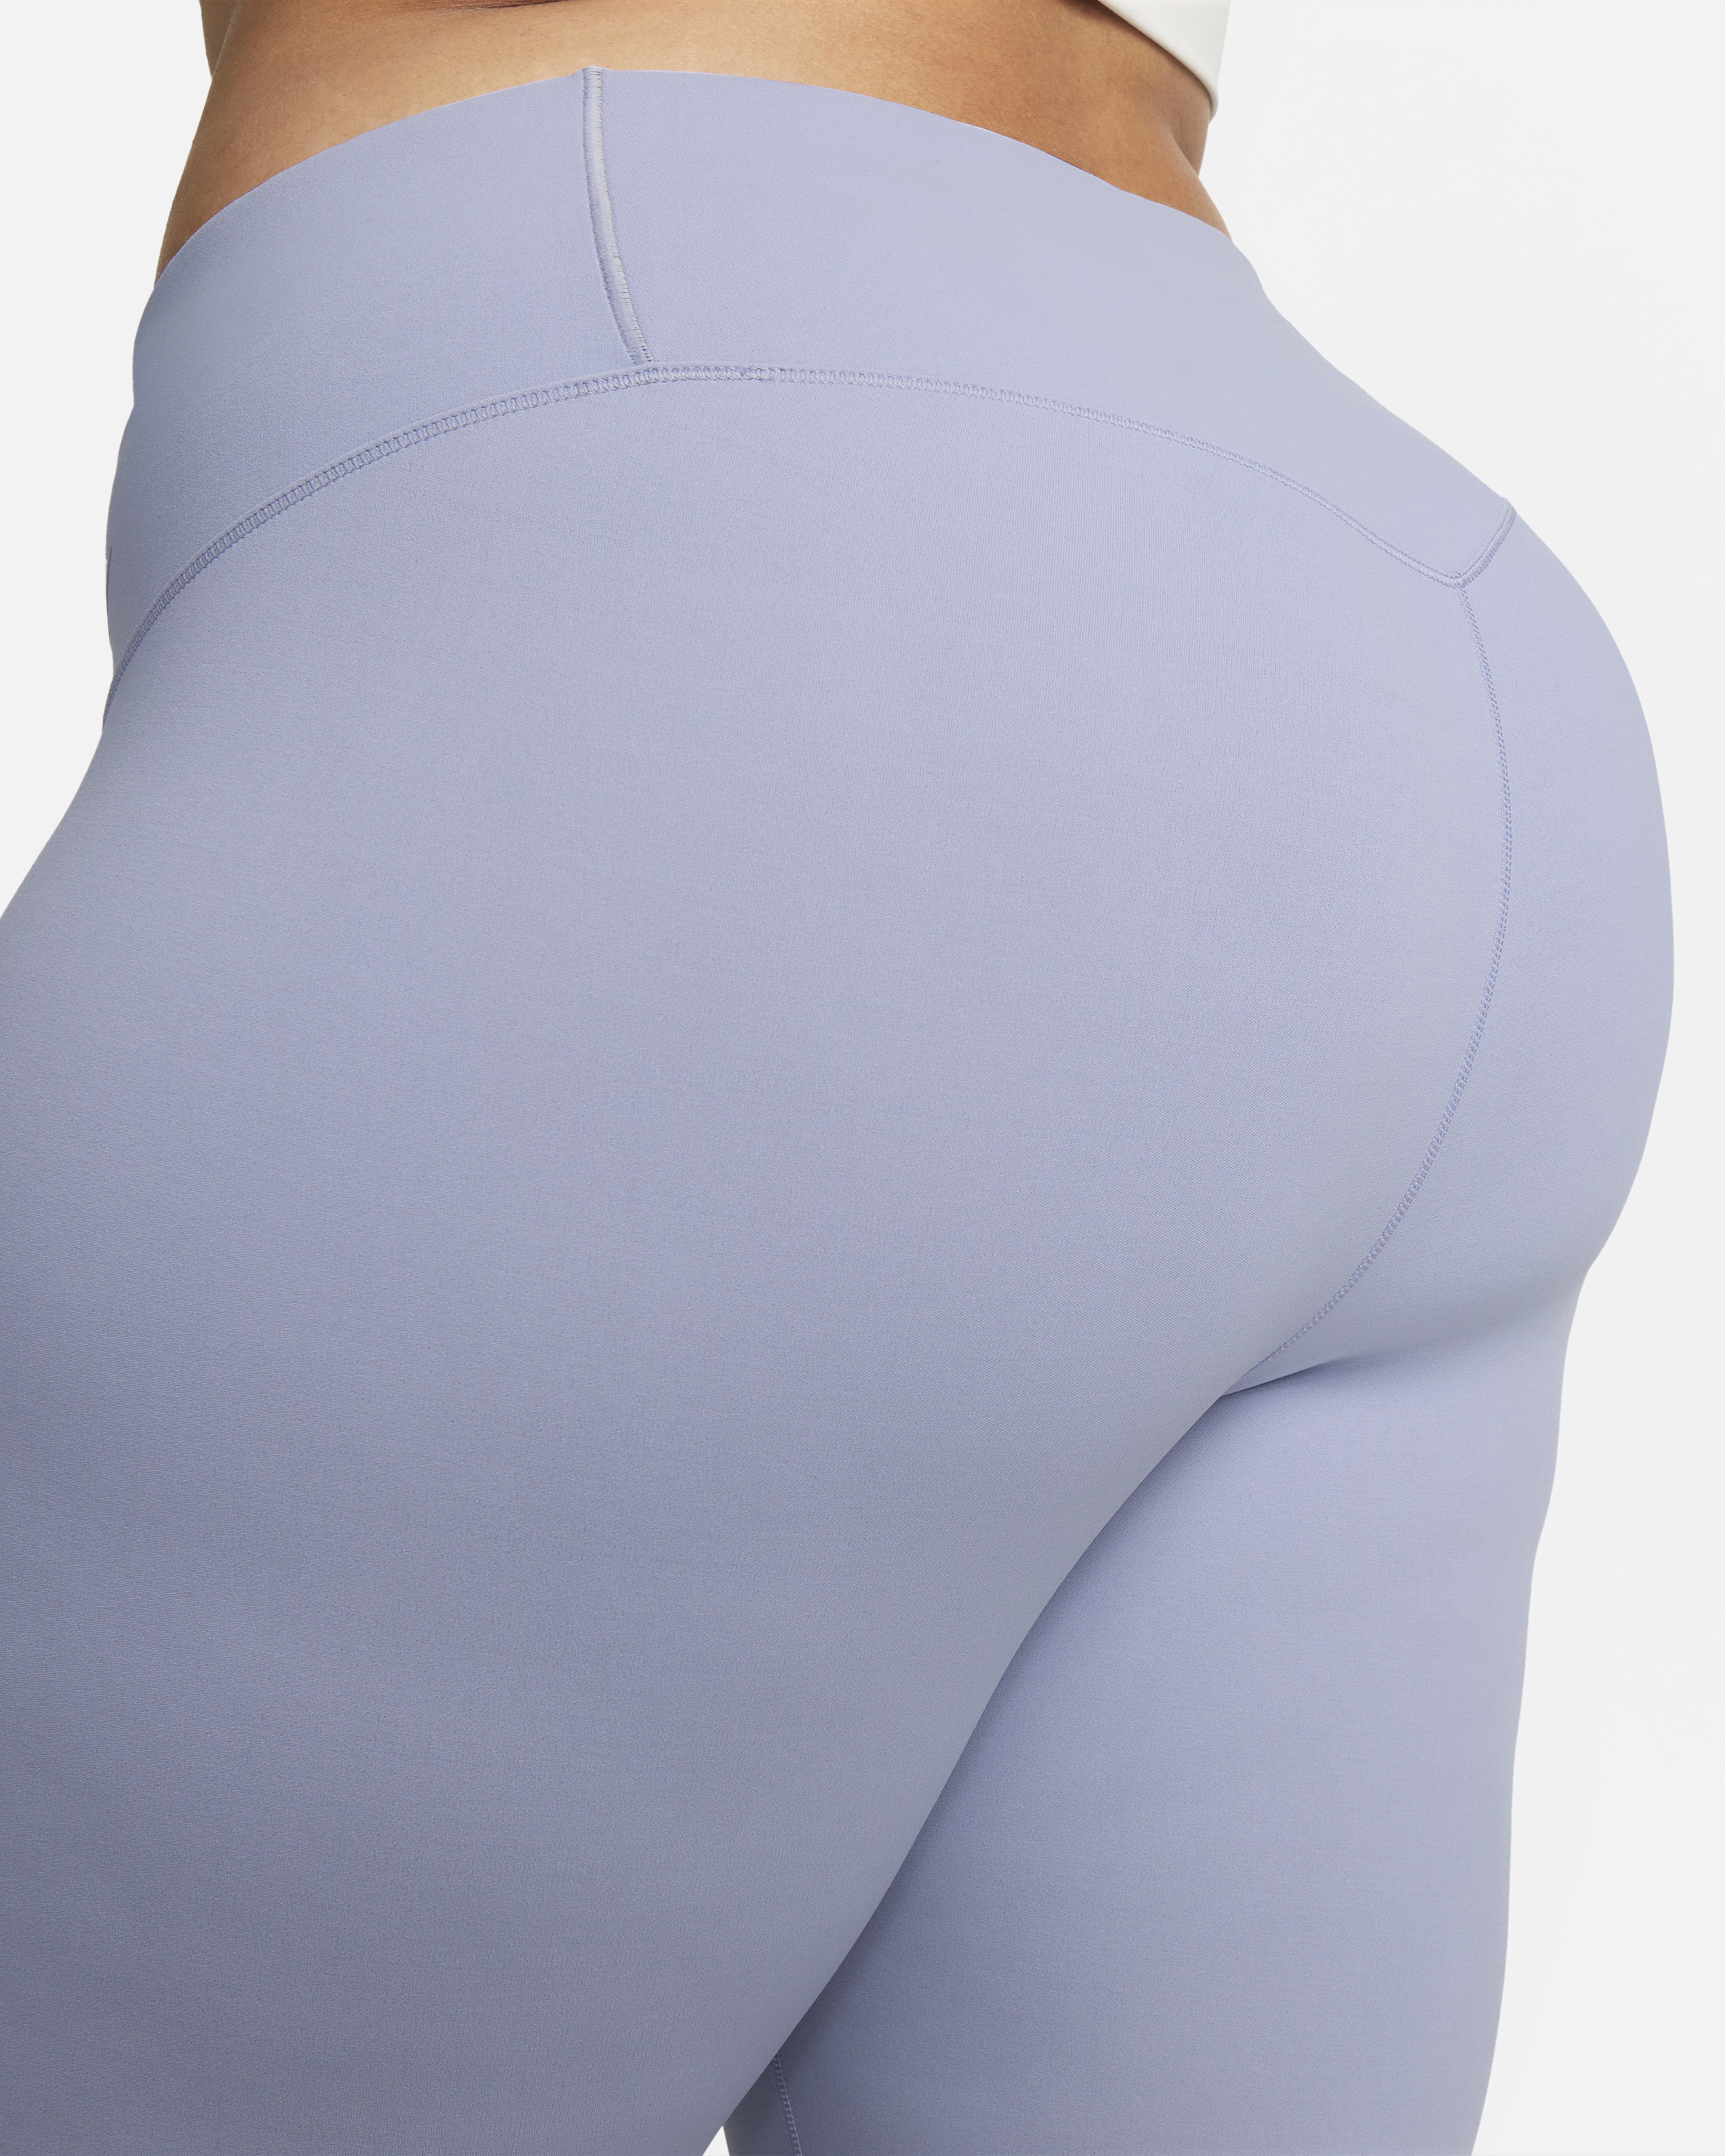 PINK - Victoria's Secret Fold Over Yoga Pants - $22 (63% Off Retail